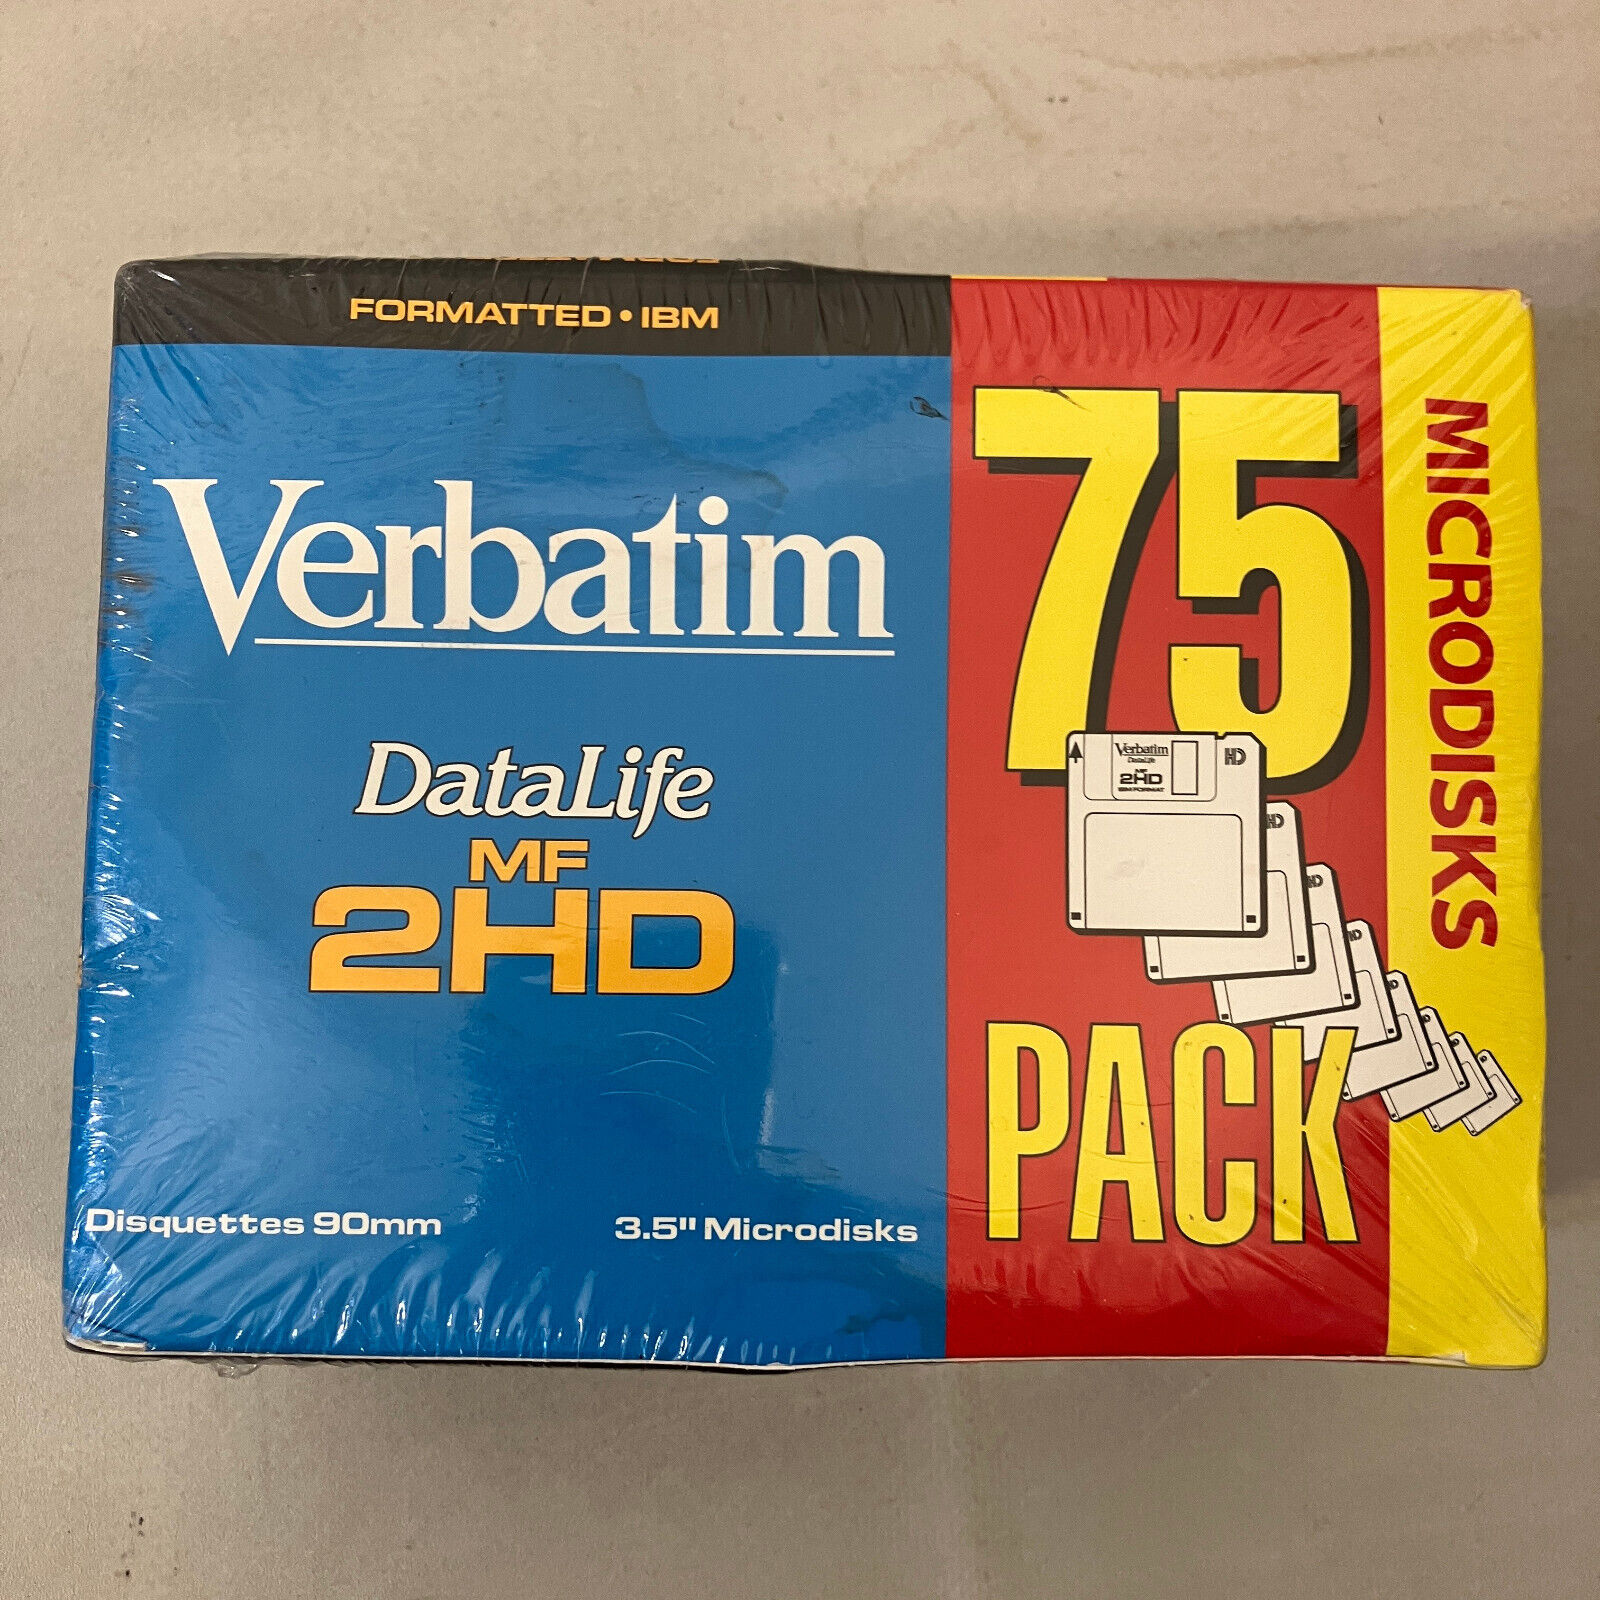 Verbatim DataLife MF 2HD Microdisks 75 Pack SEALED Floppy Disks Formatted IBM